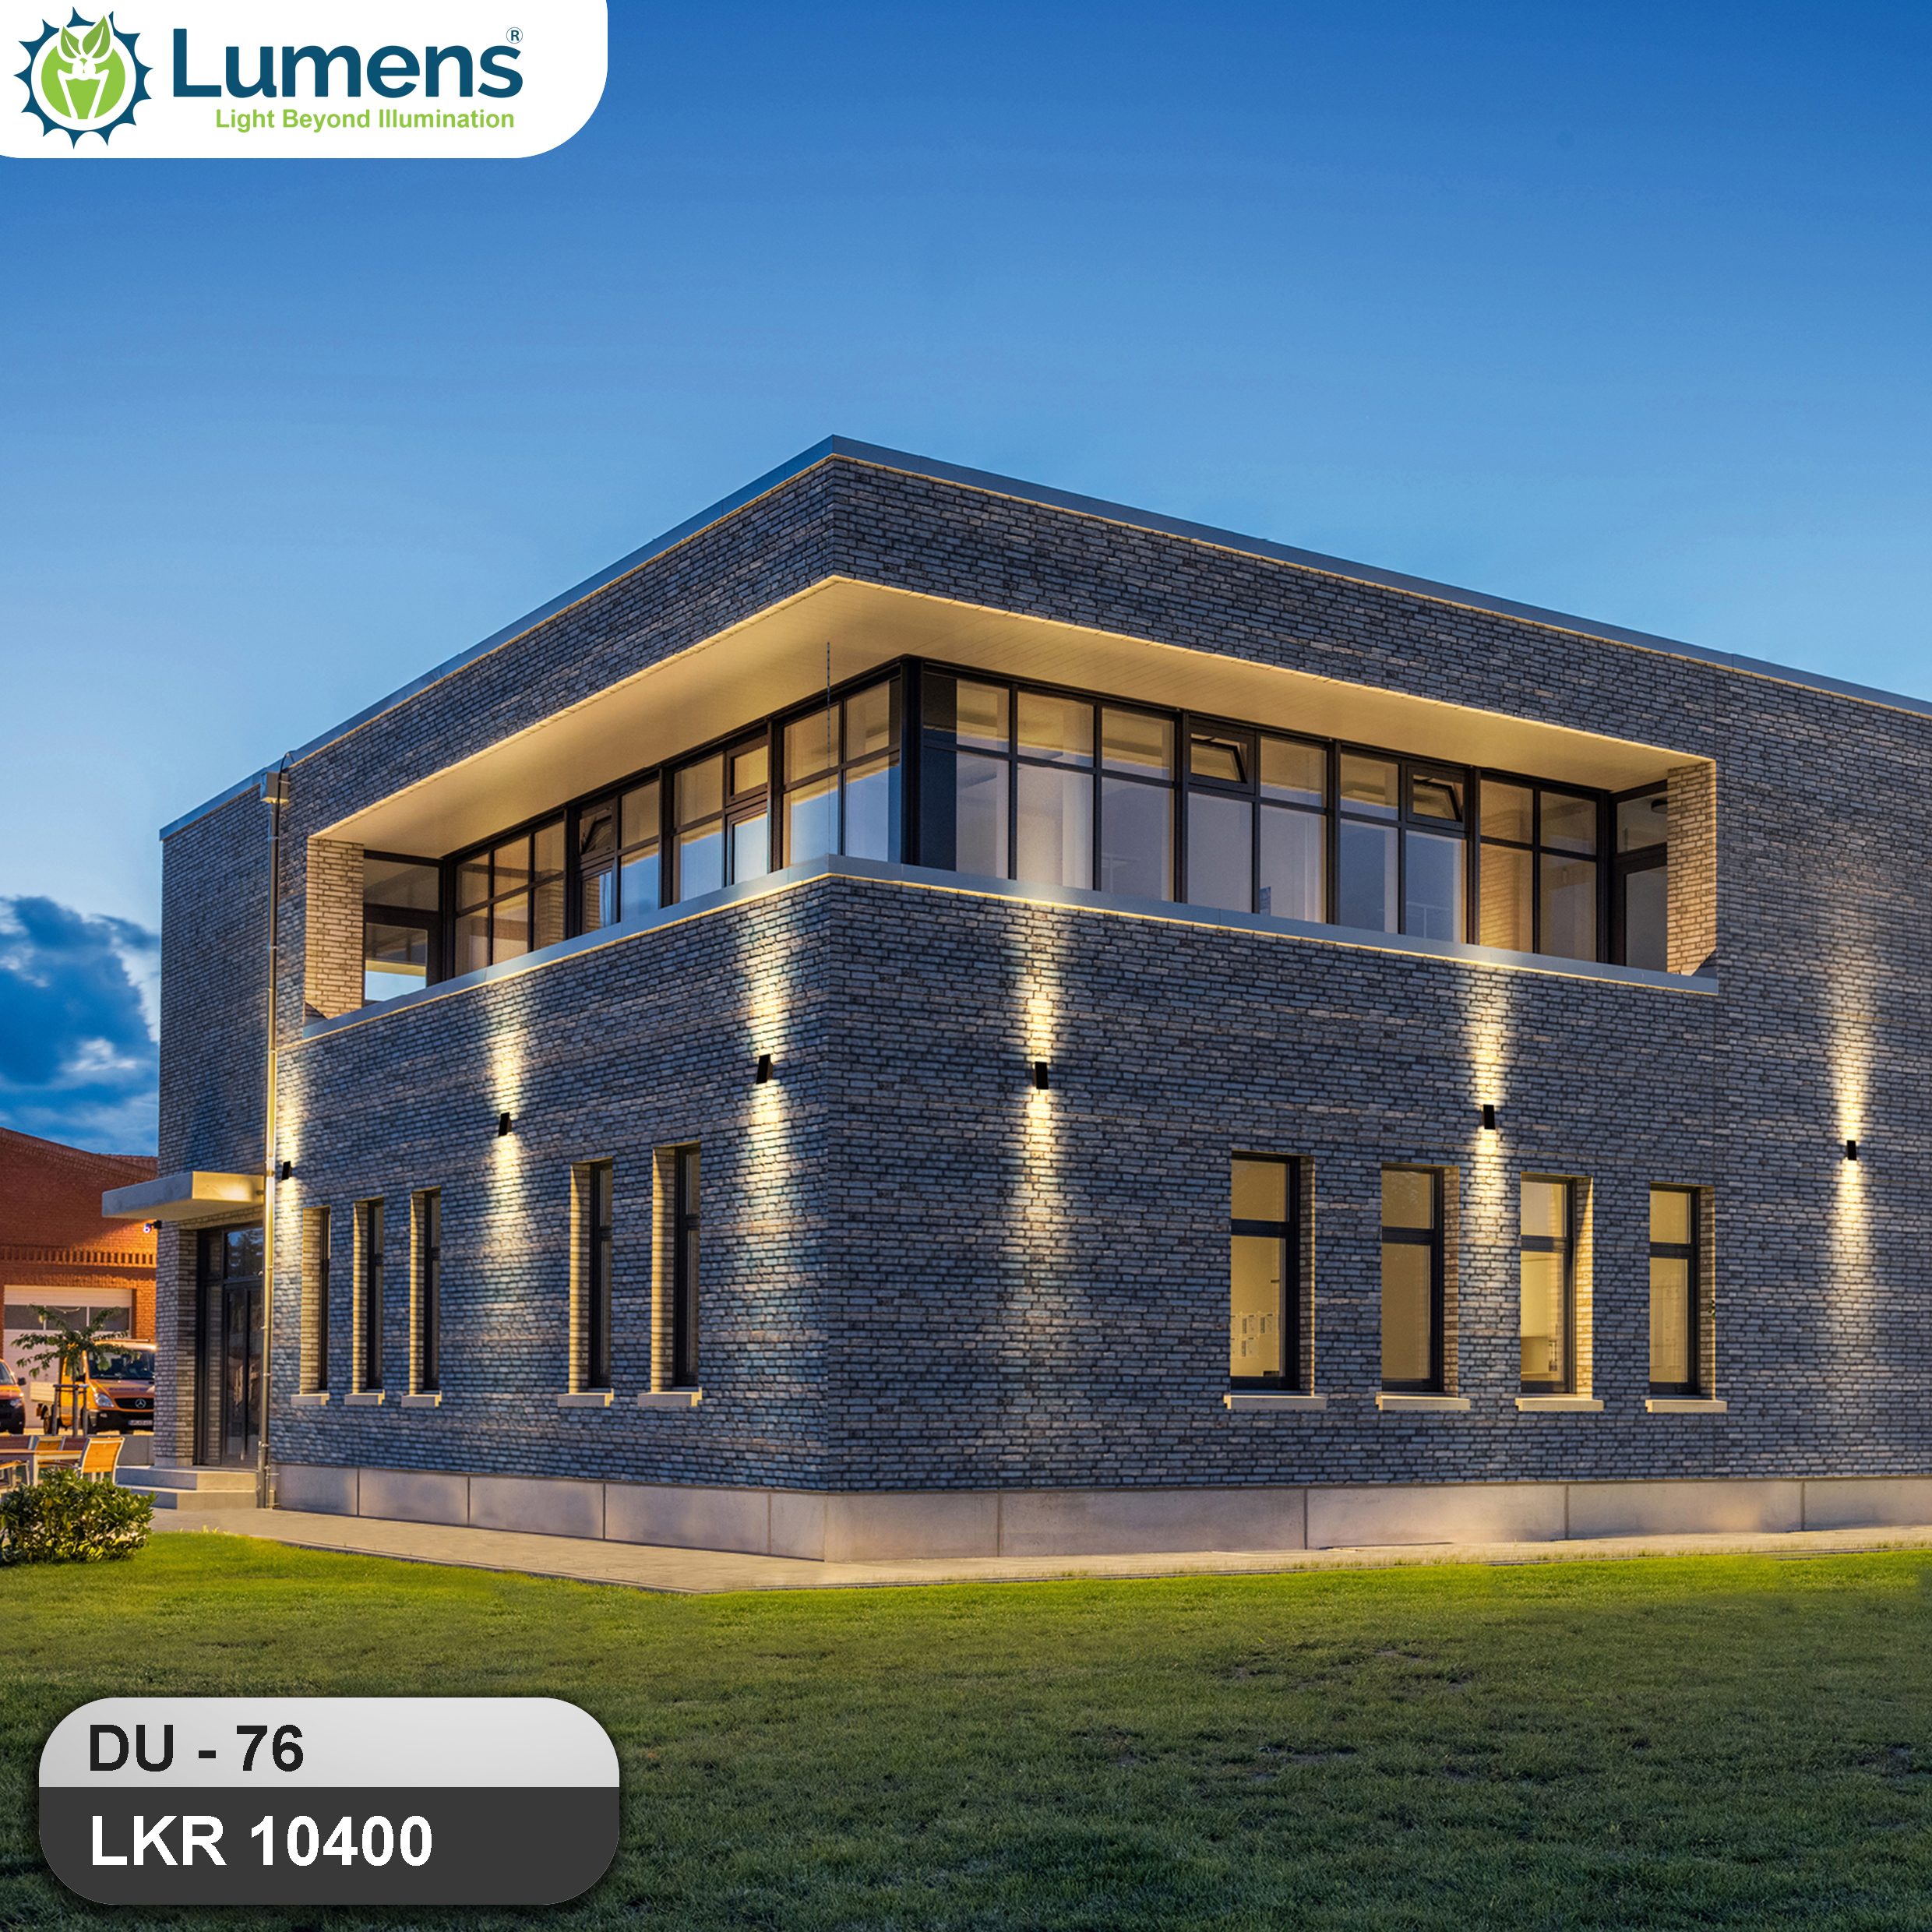 Lumens Solar Energy (Pvt) Ltd